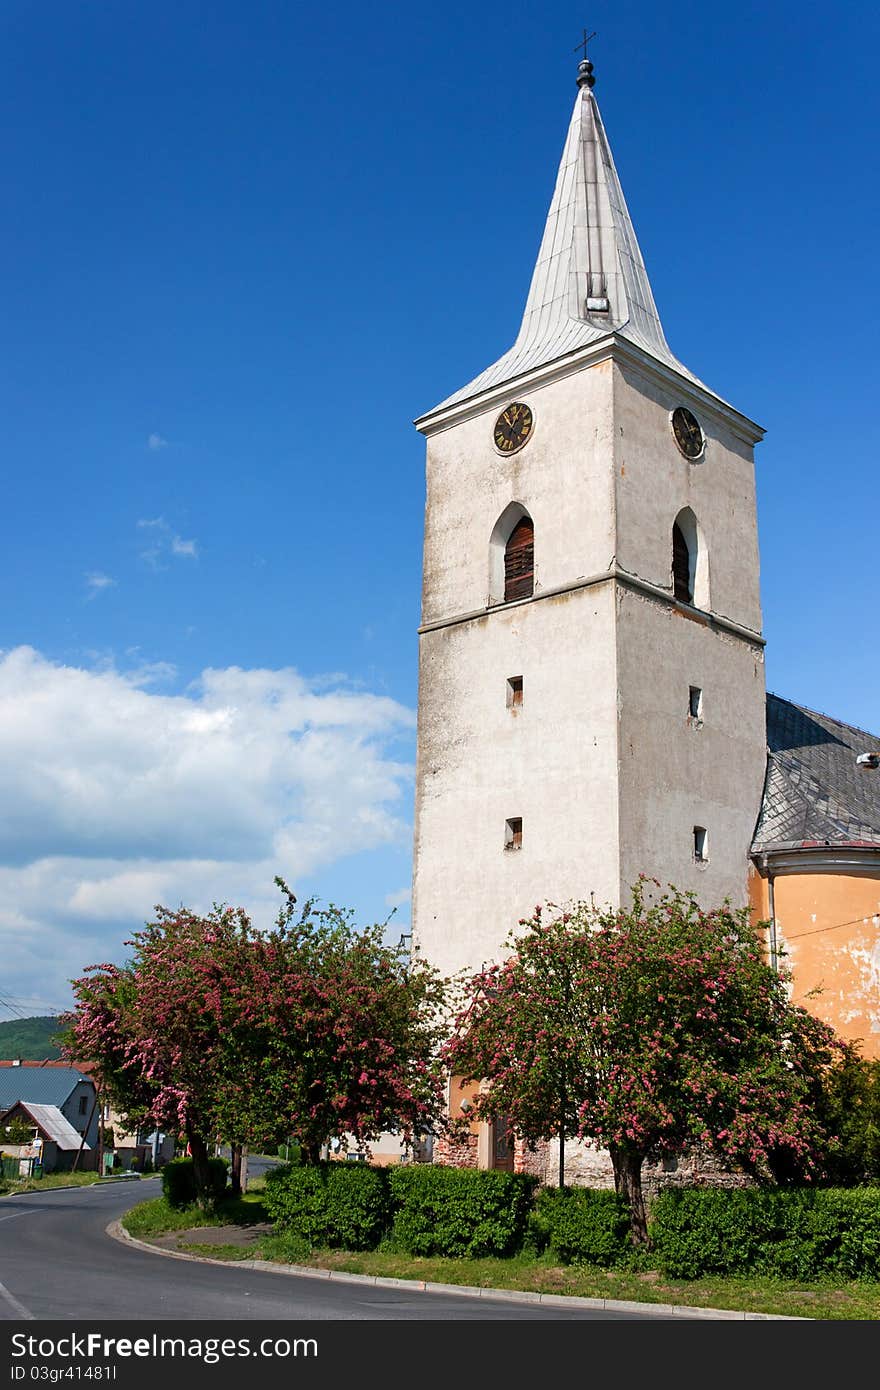 Little church in a Czech Village of Moravia